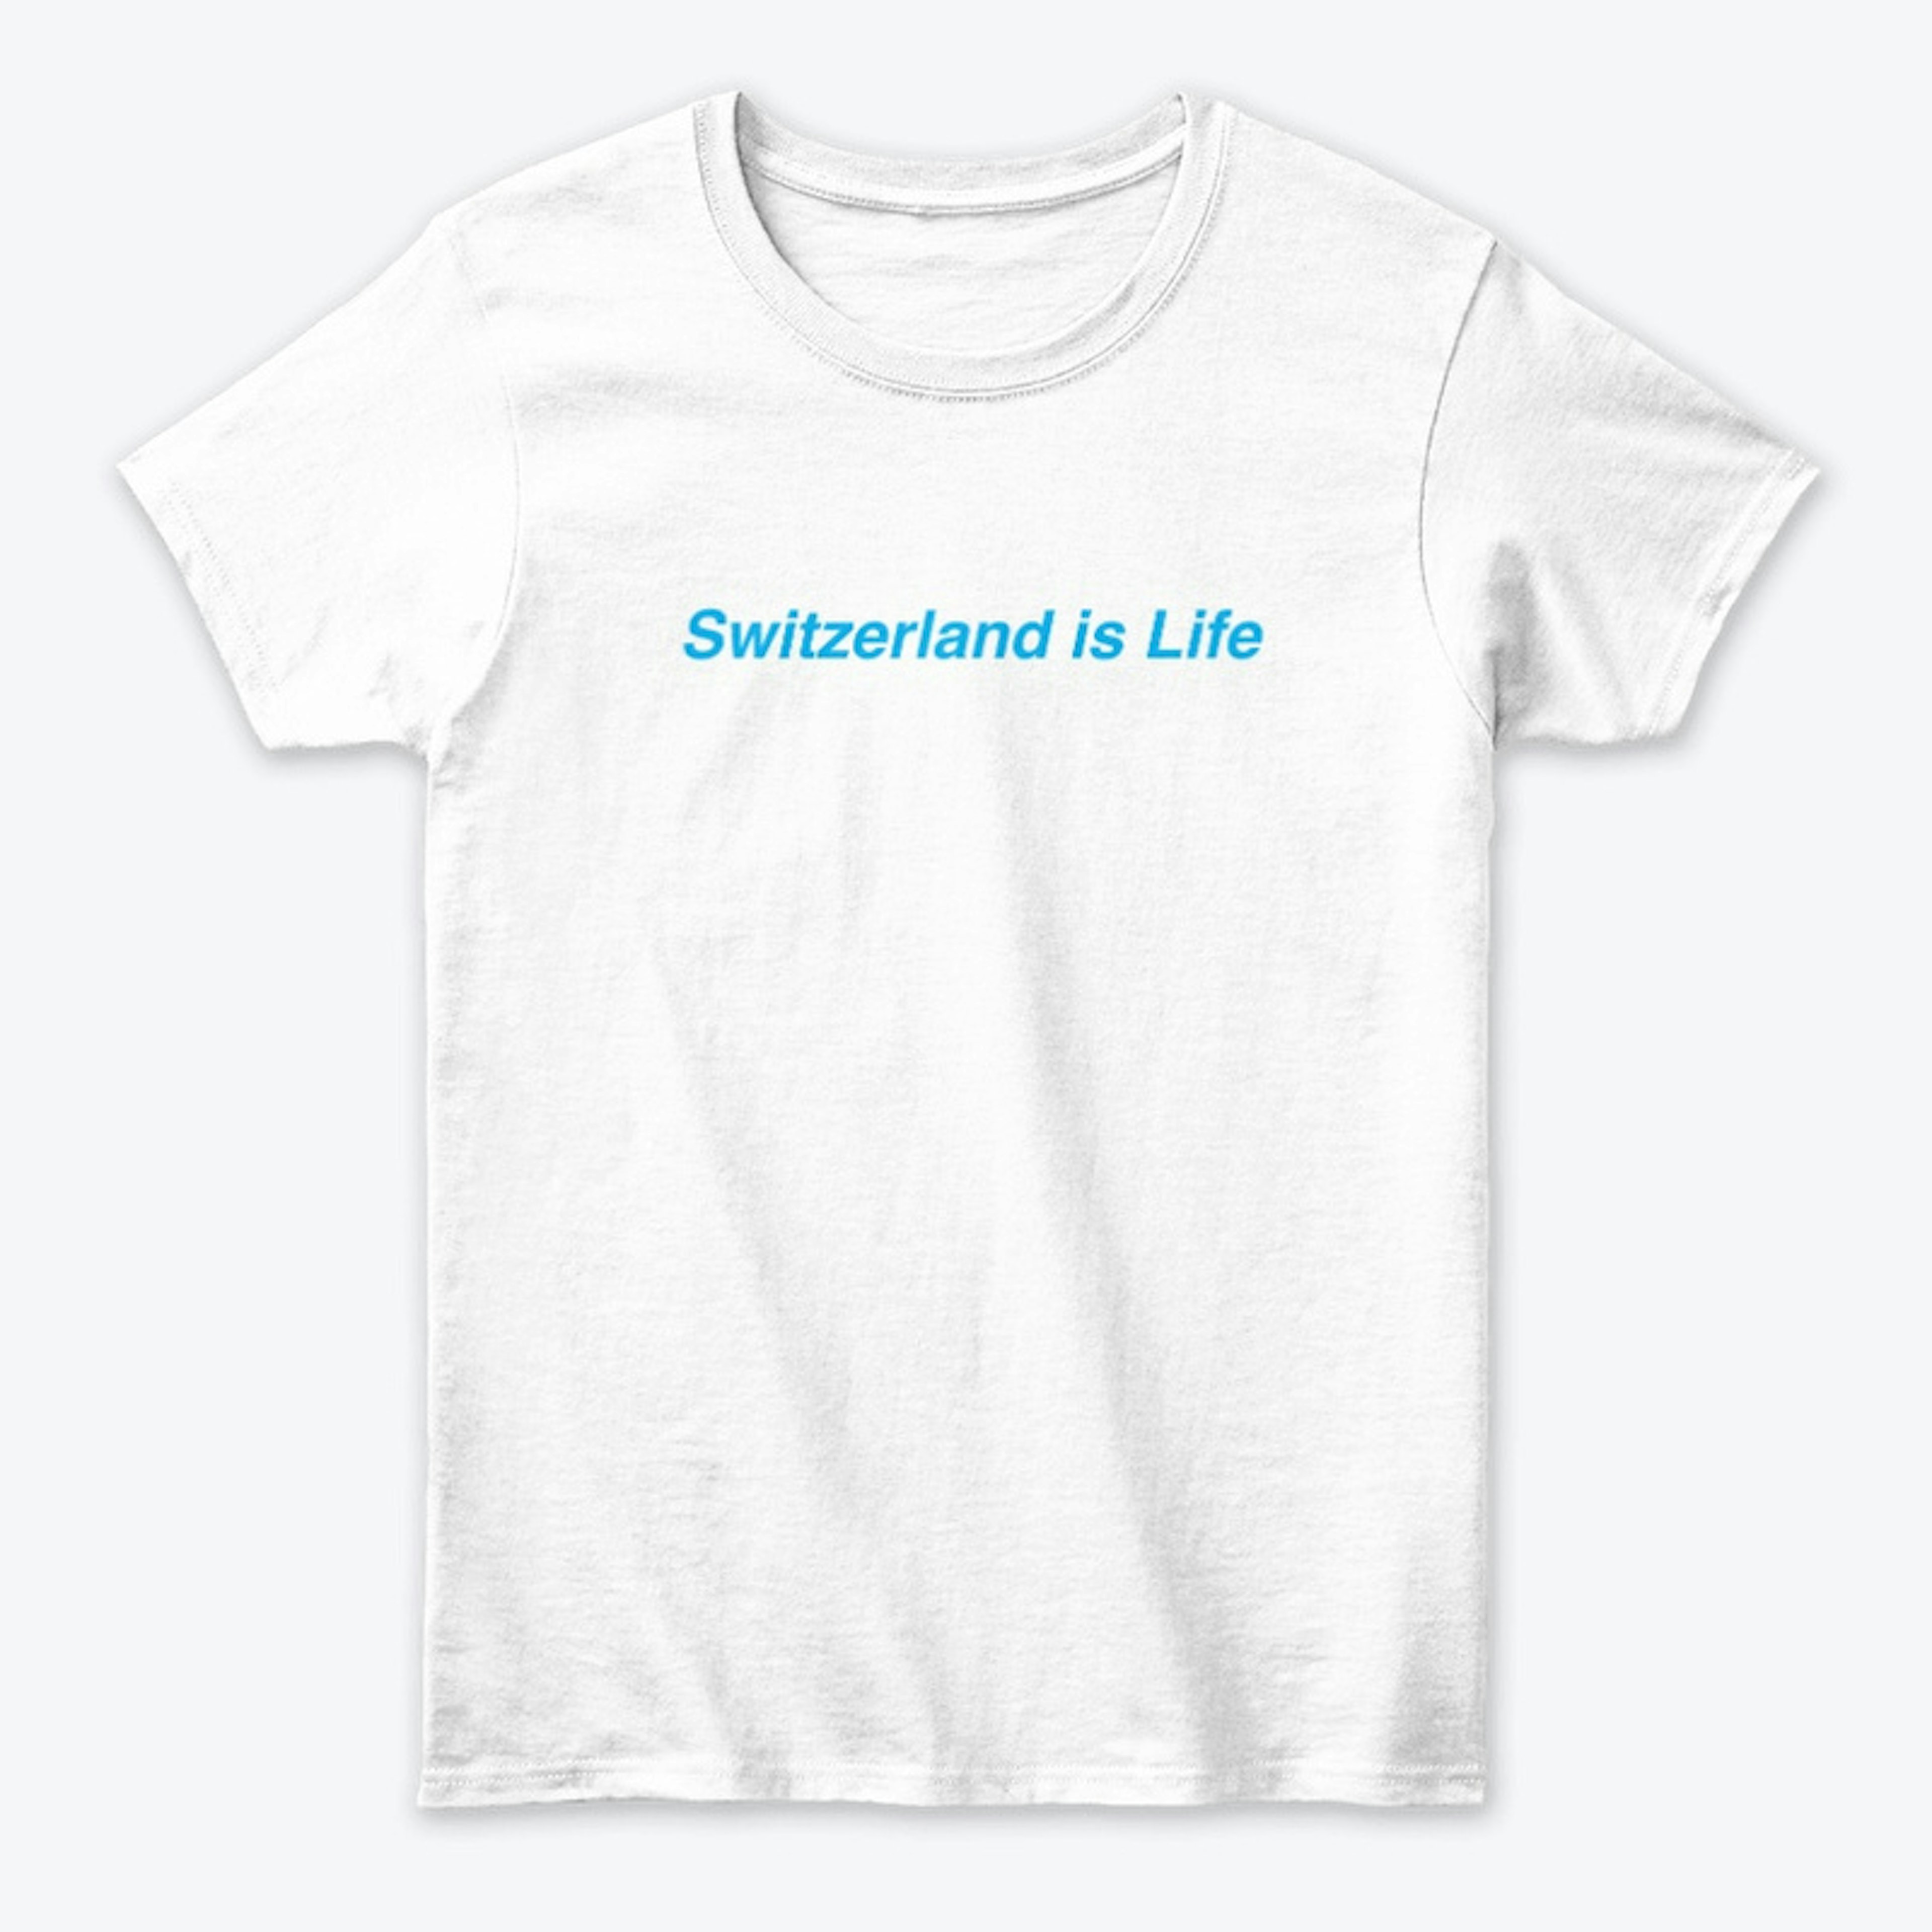 Switzerland is Life White/Blue